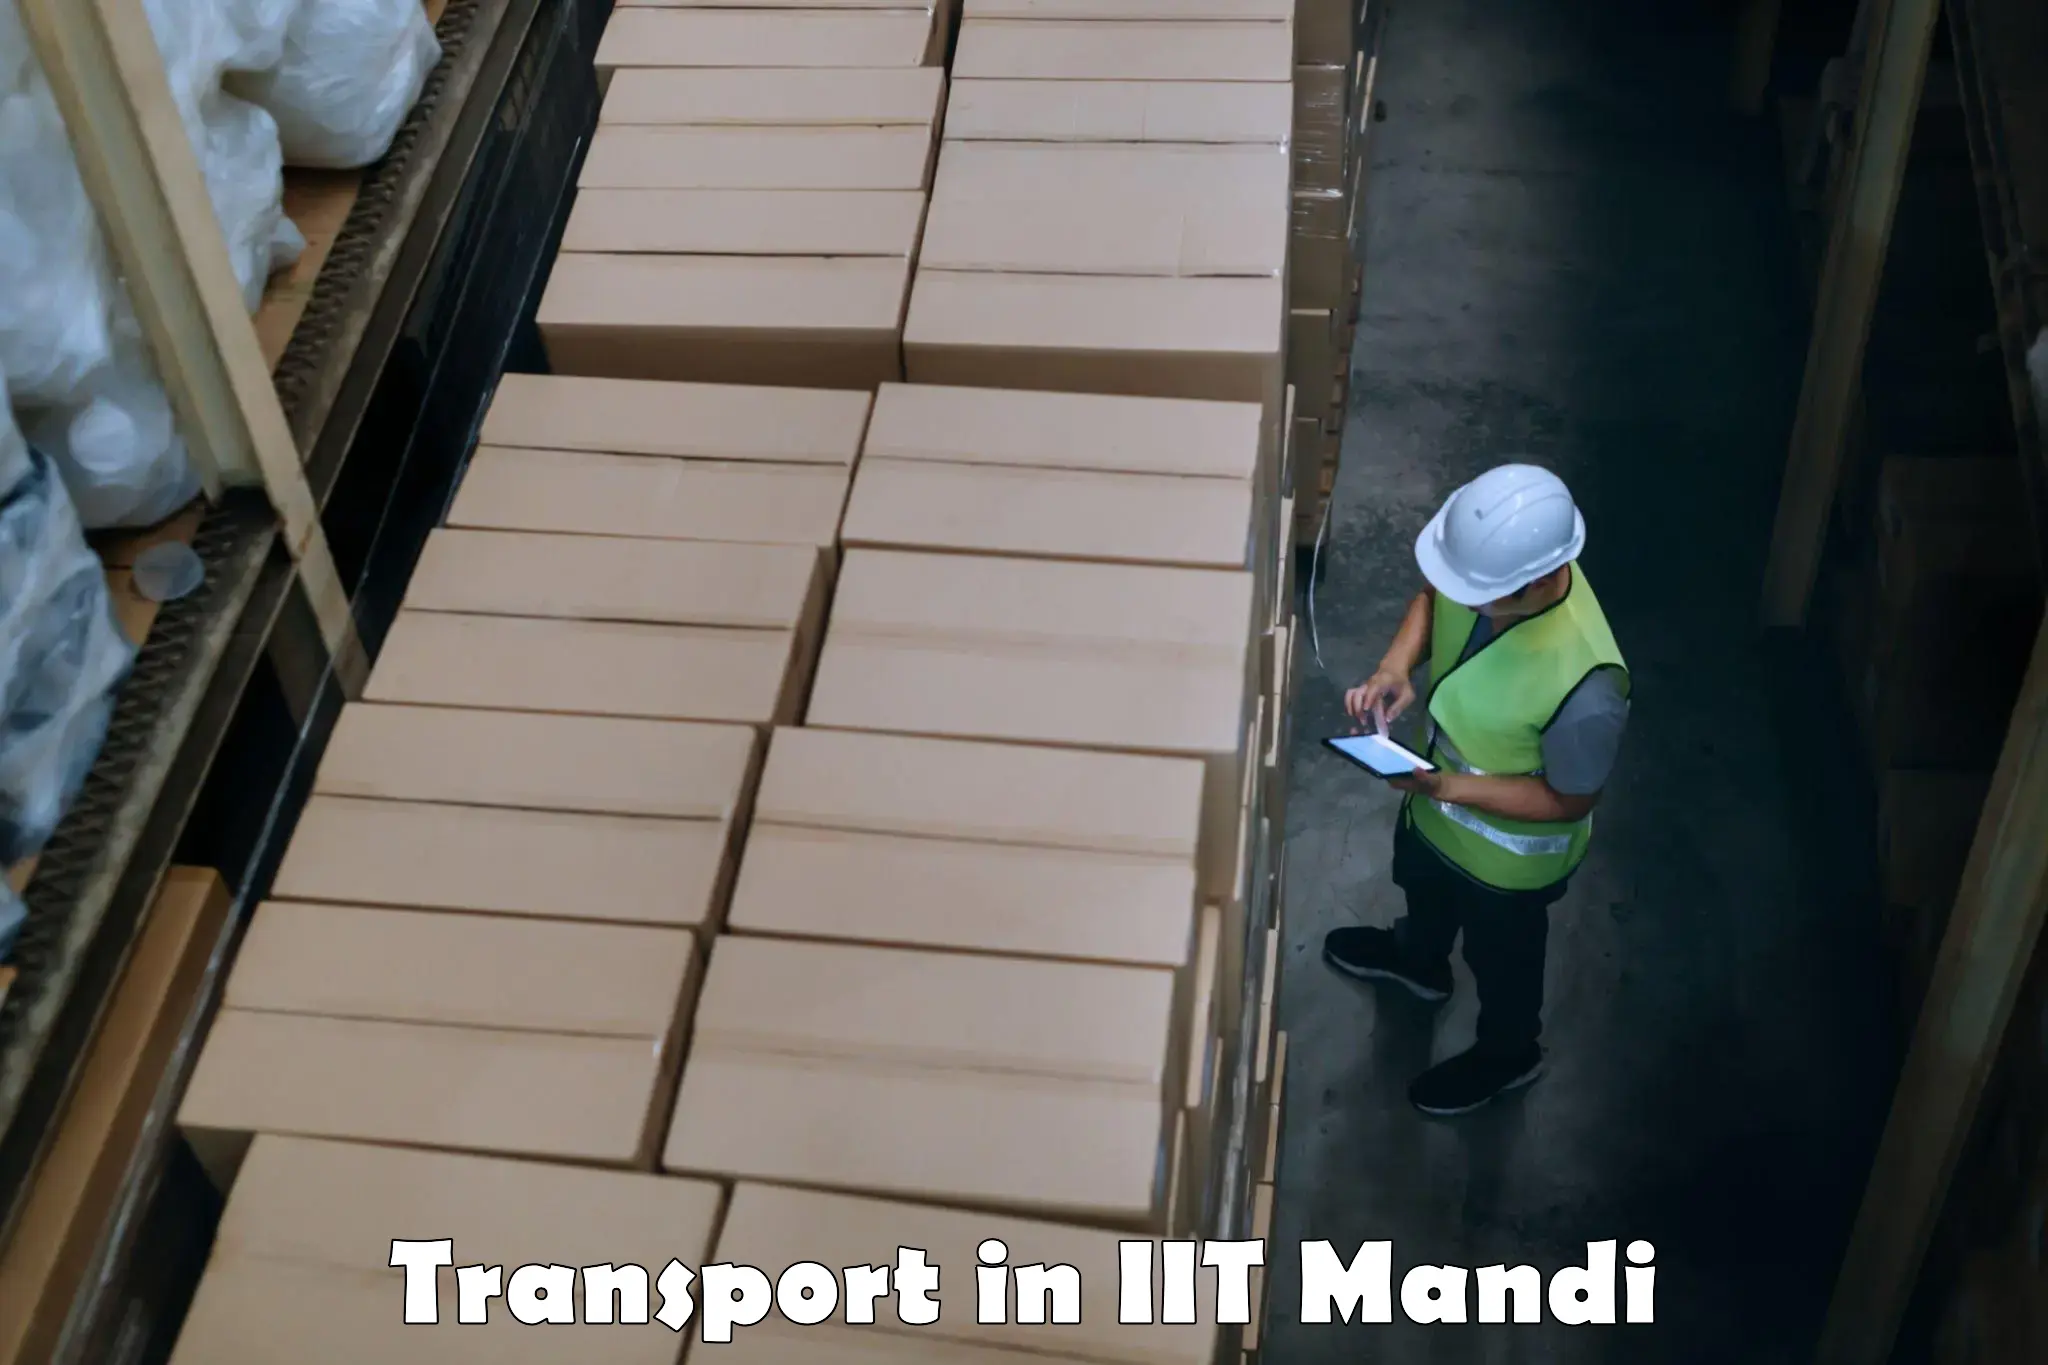 Daily transport service in IIT Mandi